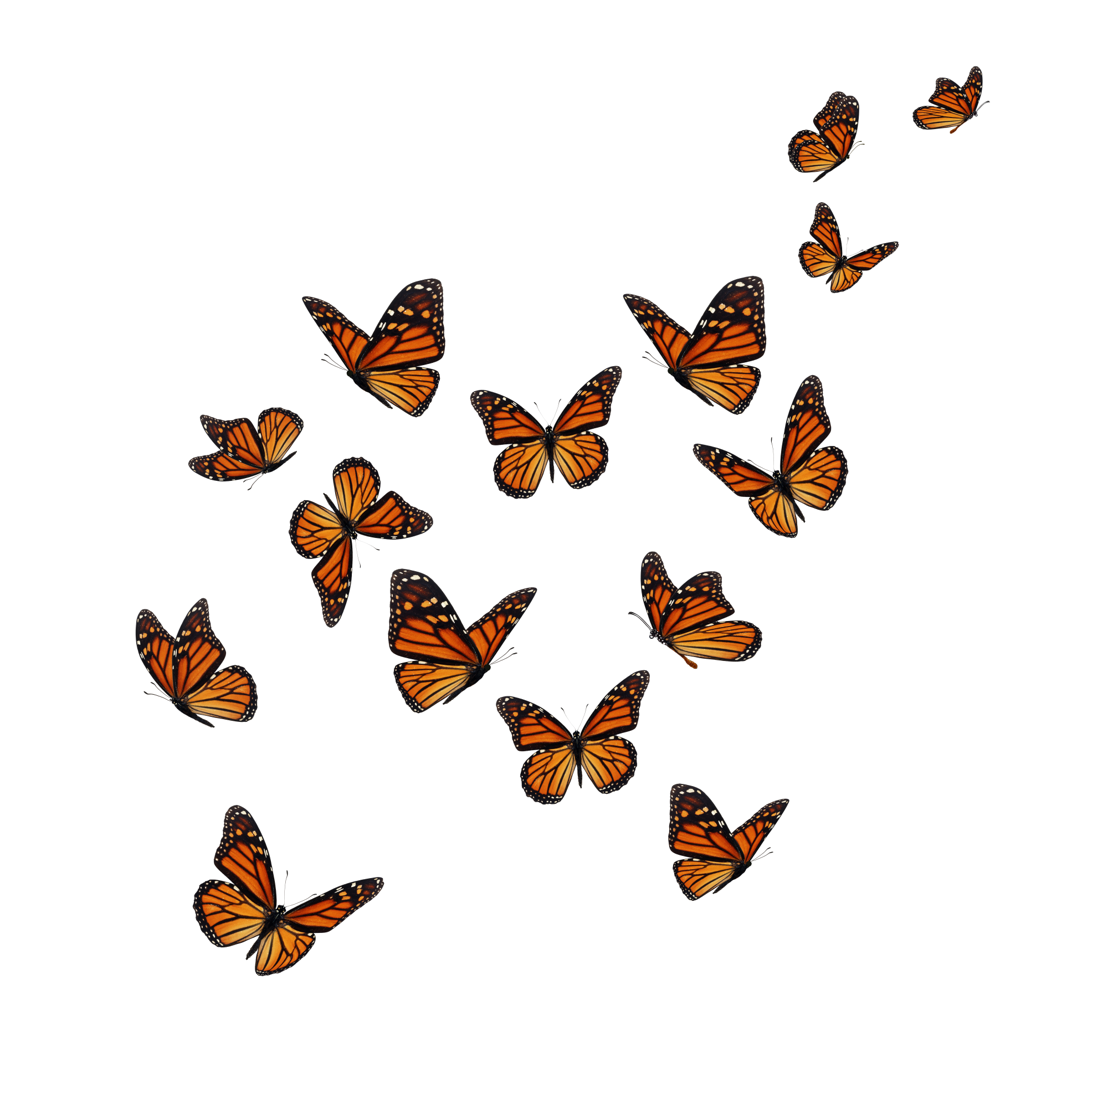 Monarch butterflies take flight at Coors Field